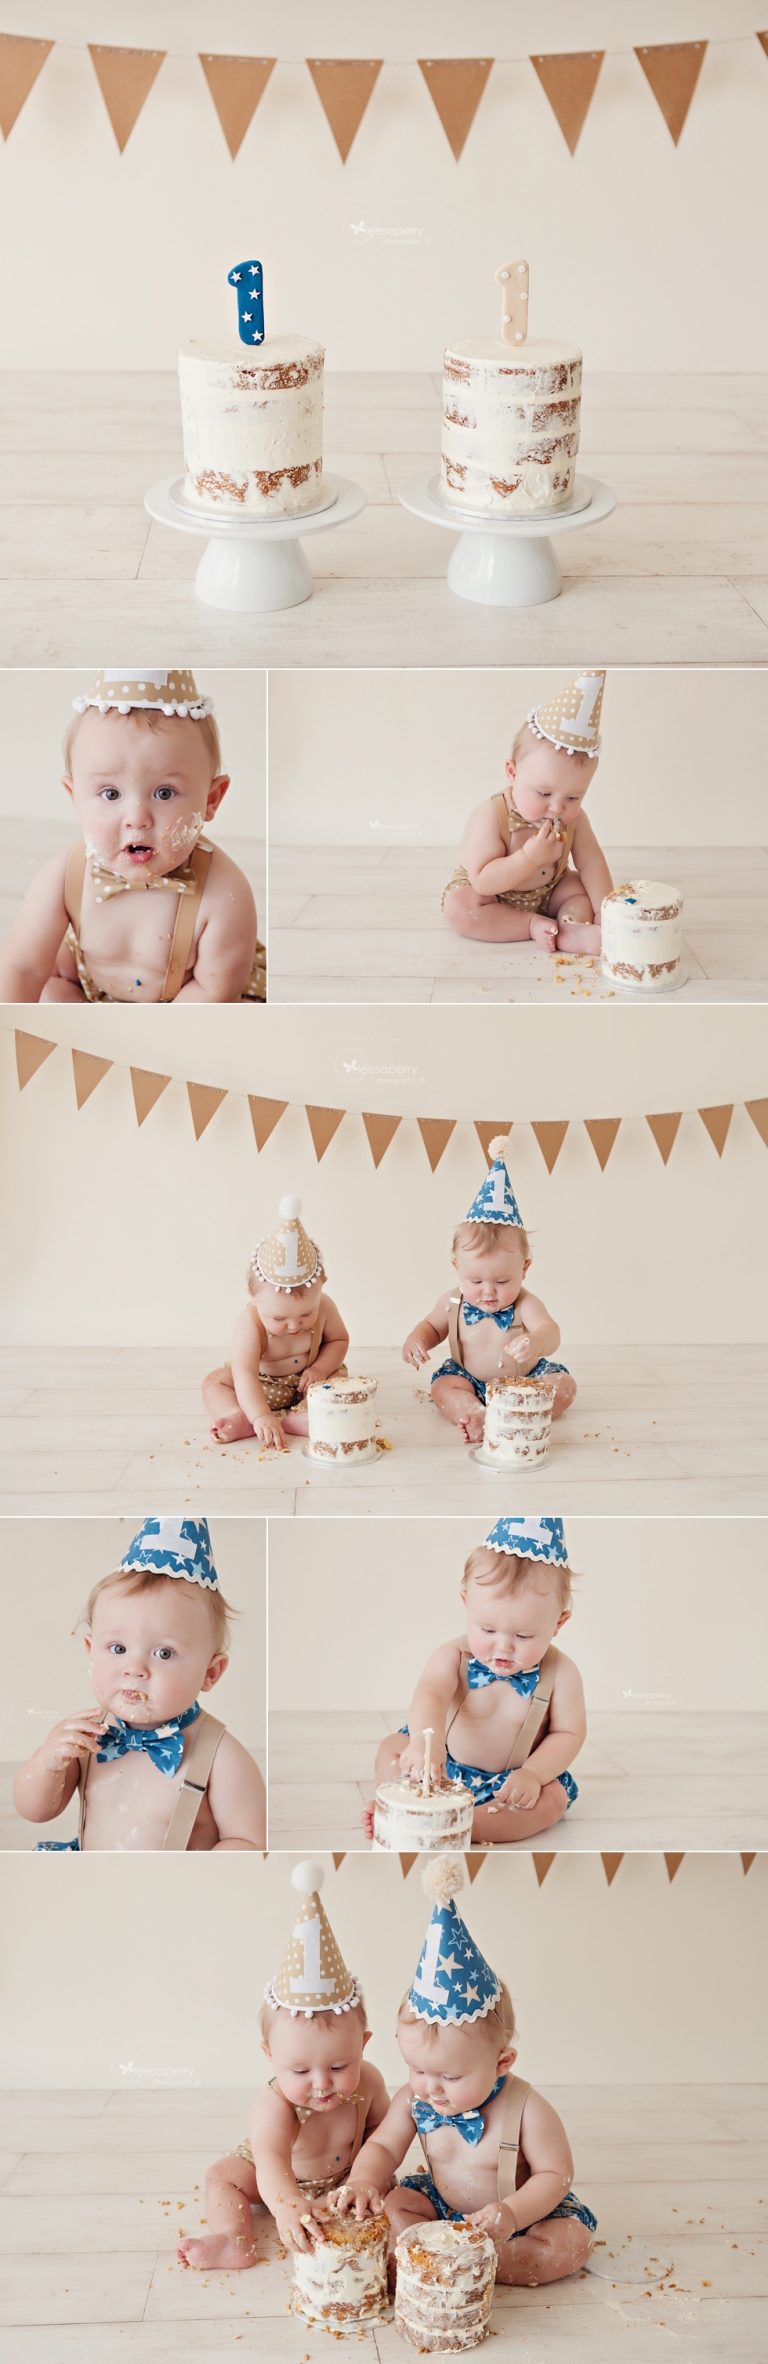 Twin cake smash, brisbane baby photographer